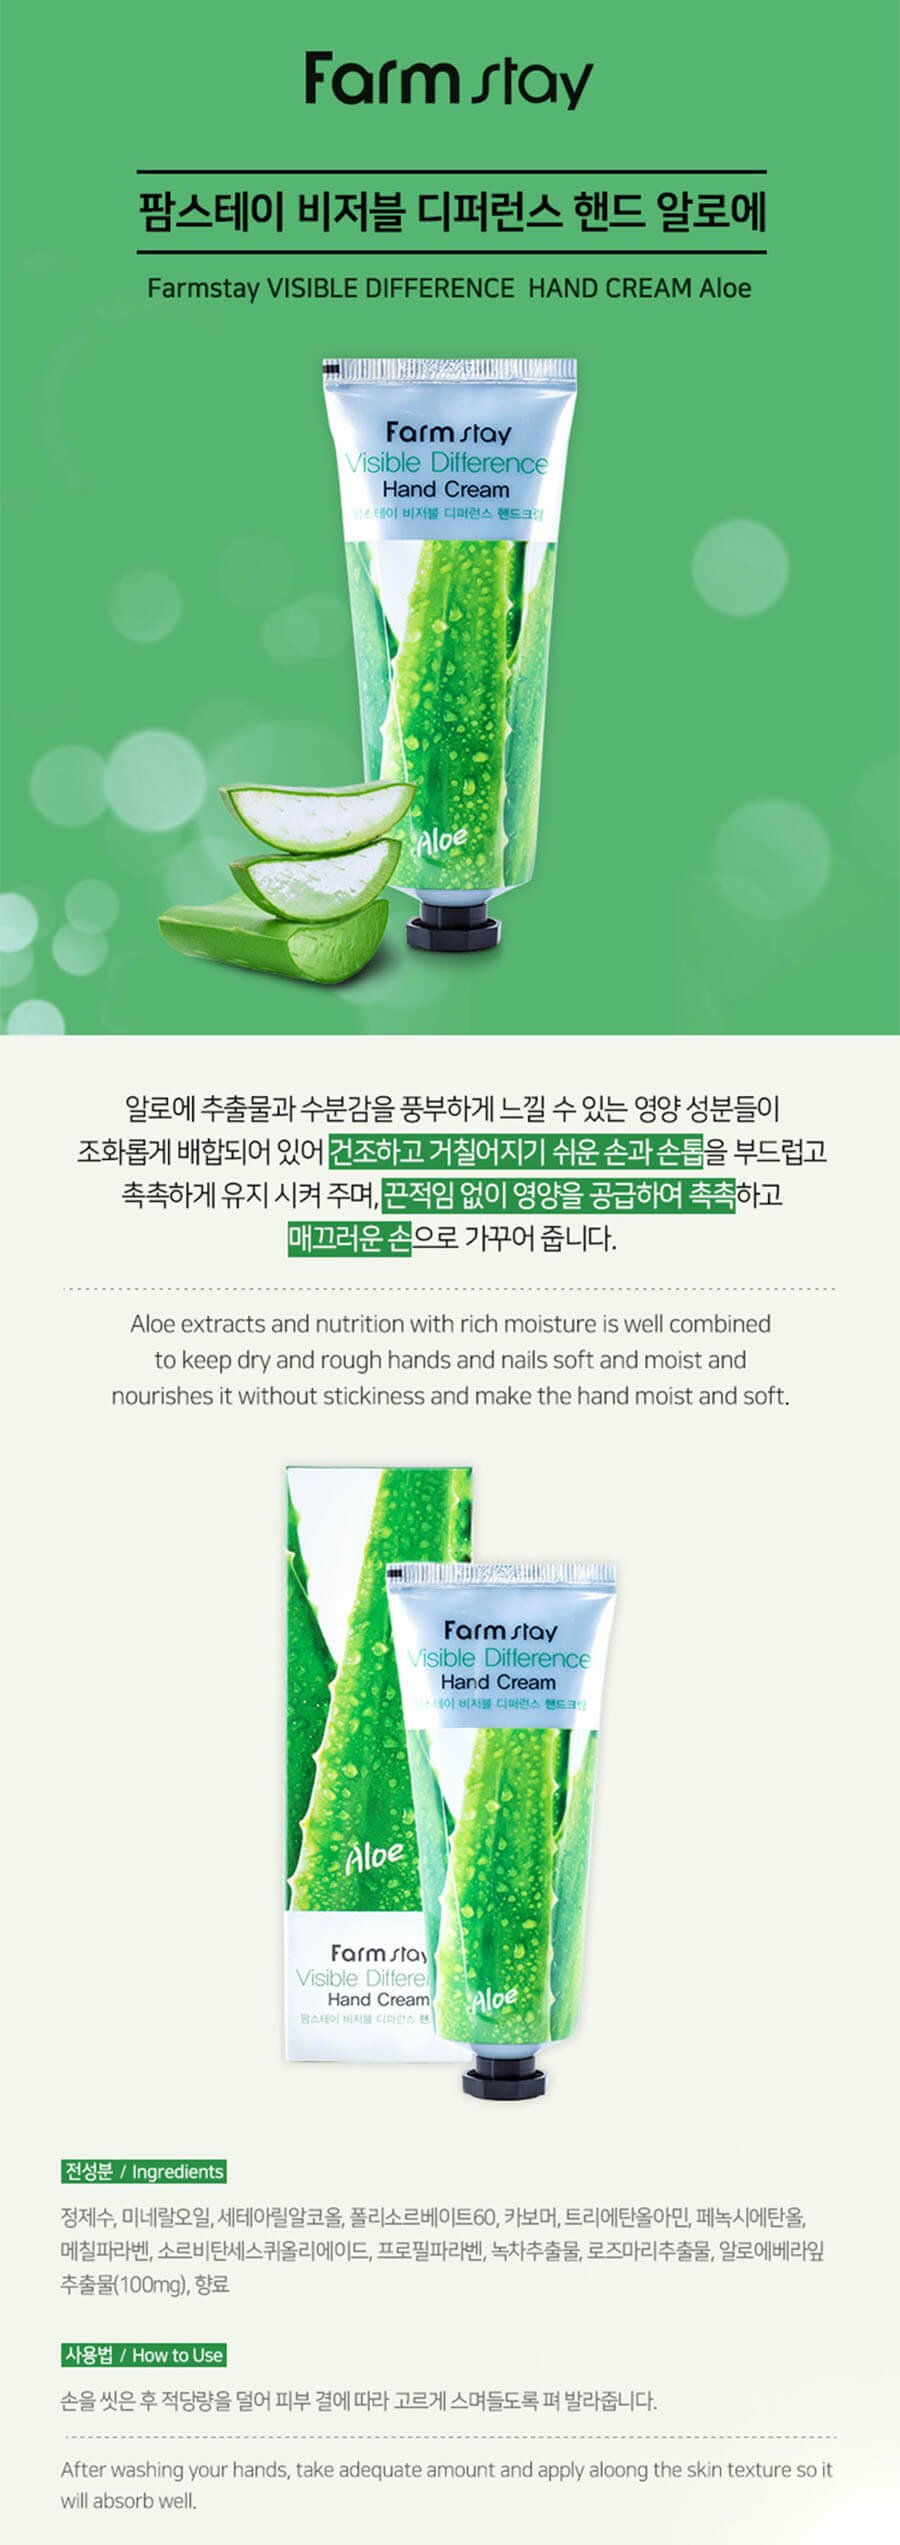 Aloe Vera Hand Cream - Information